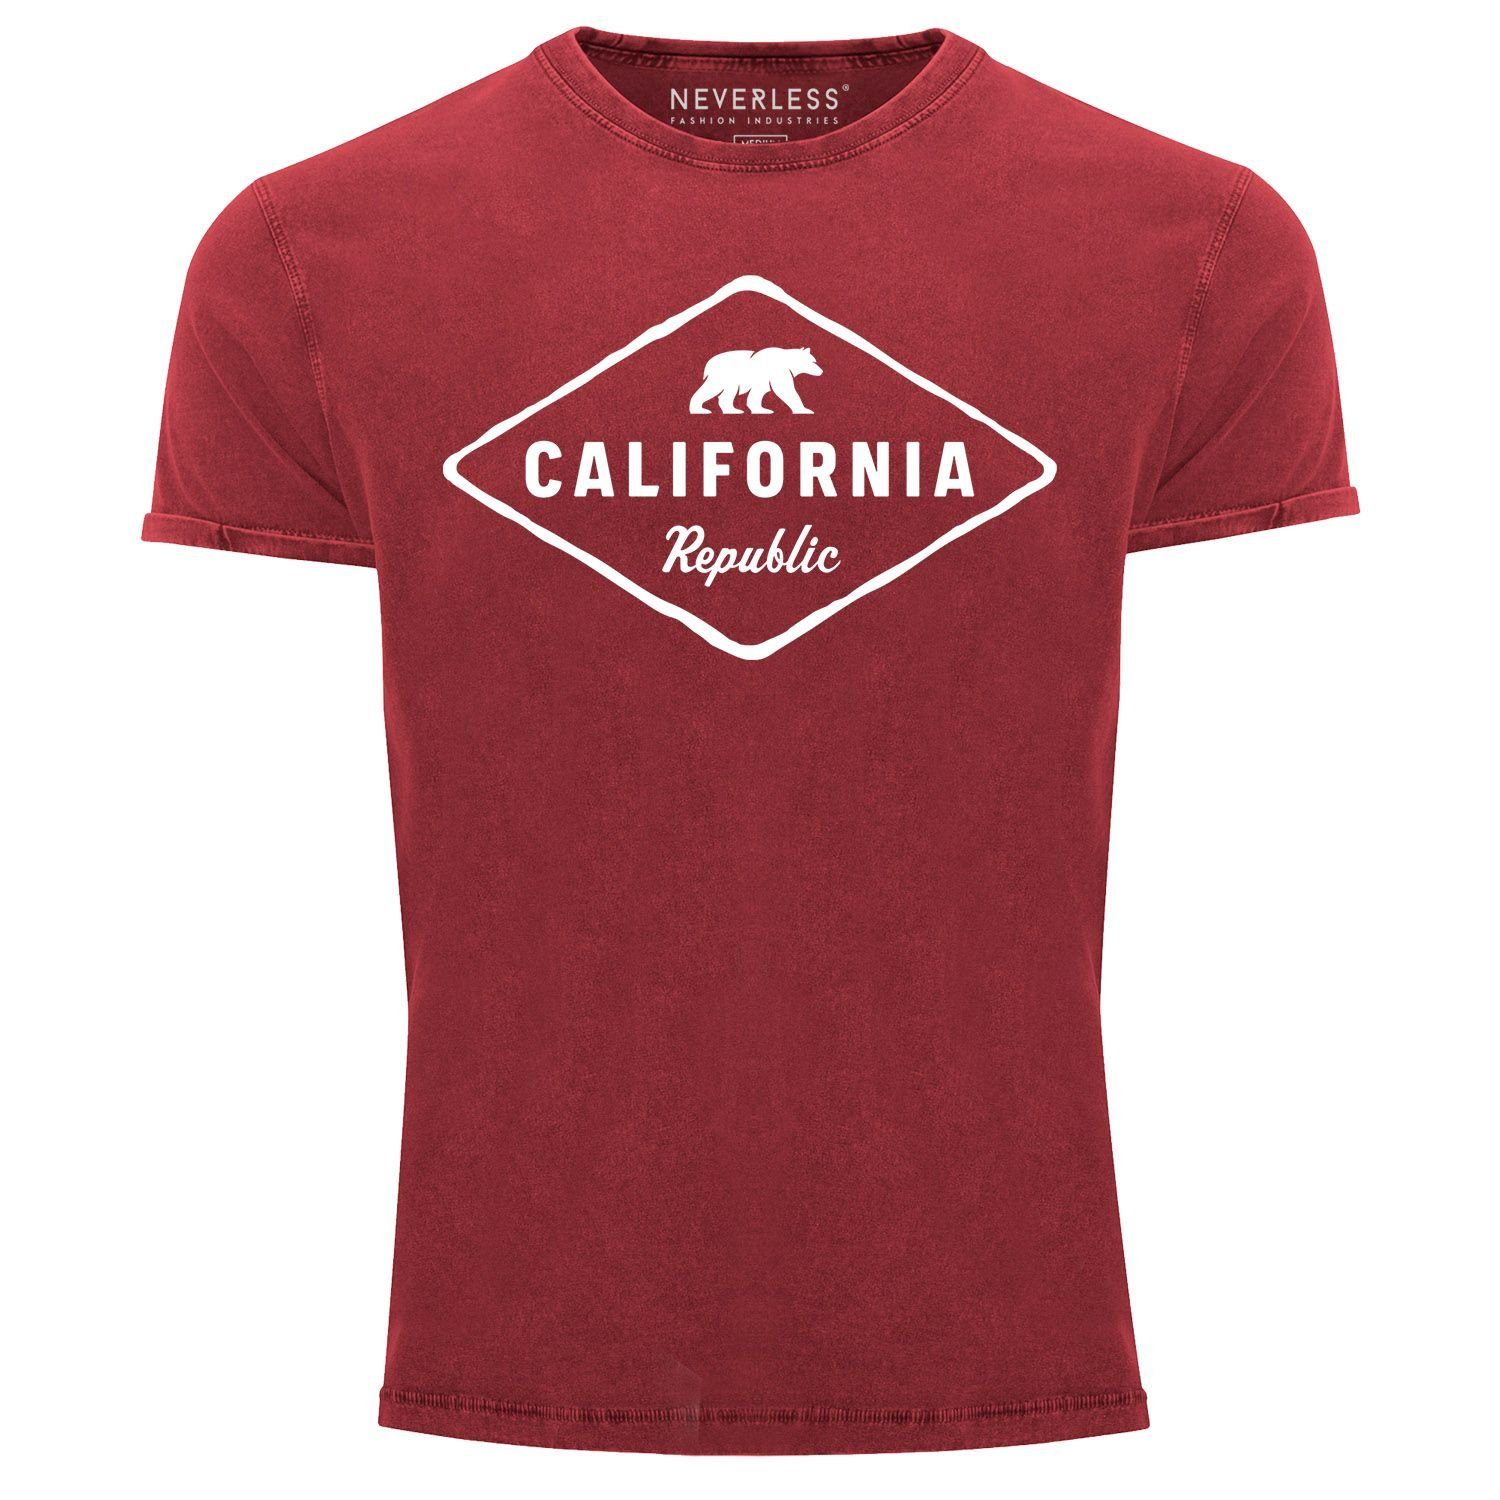 Neverless Print-Shirt Herren Vintage Shirt California Republic Bear Badge Bär Sunshine State USA Printshirt T-Shirt Aufdruck Neverless® mit Print rot